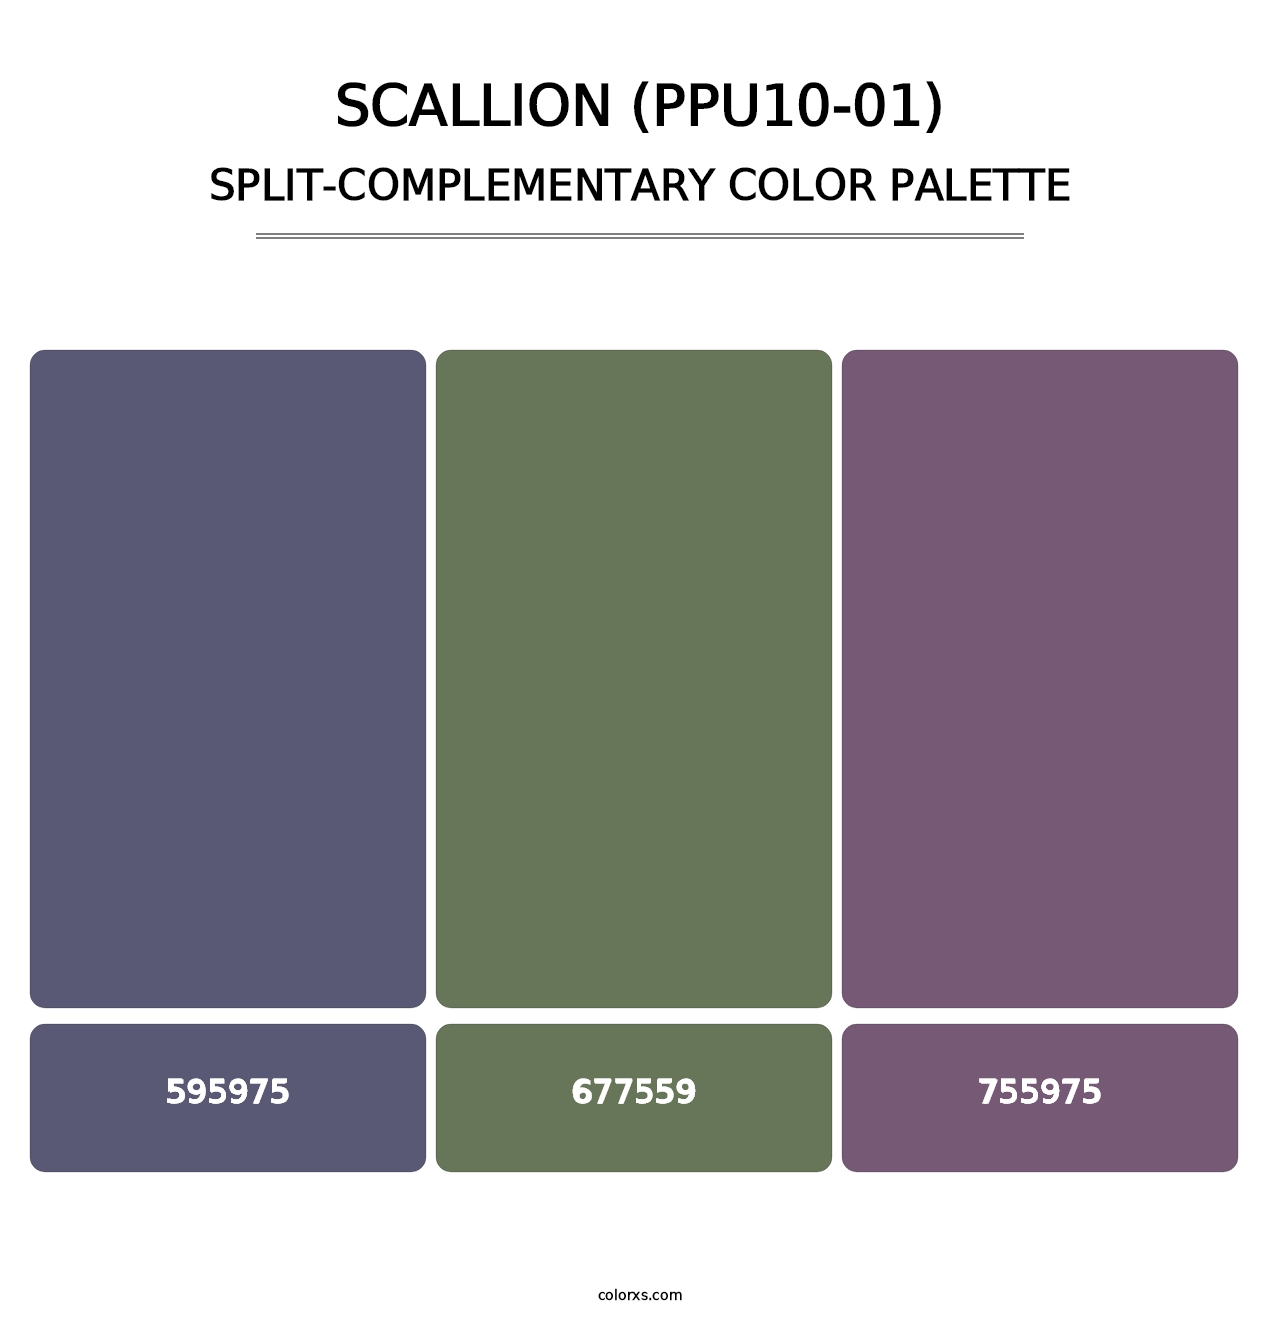 Scallion (PPU10-01) - Split-Complementary Color Palette